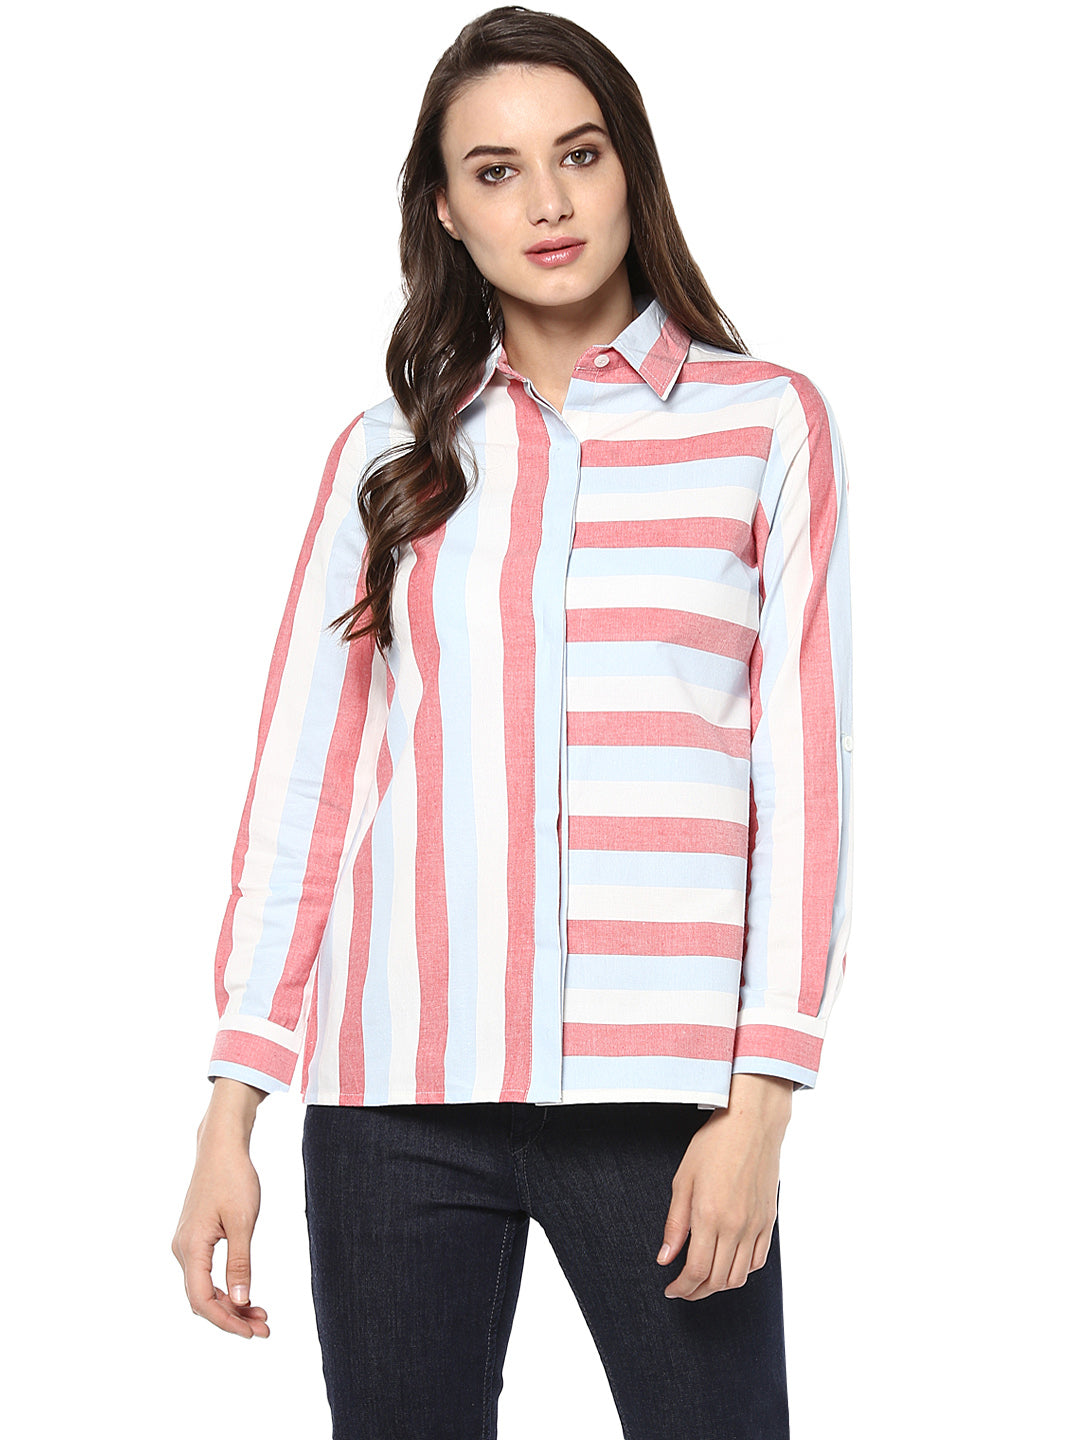 Women's Cotton Horizontal and Vertical Striped Shirt - StyleStone